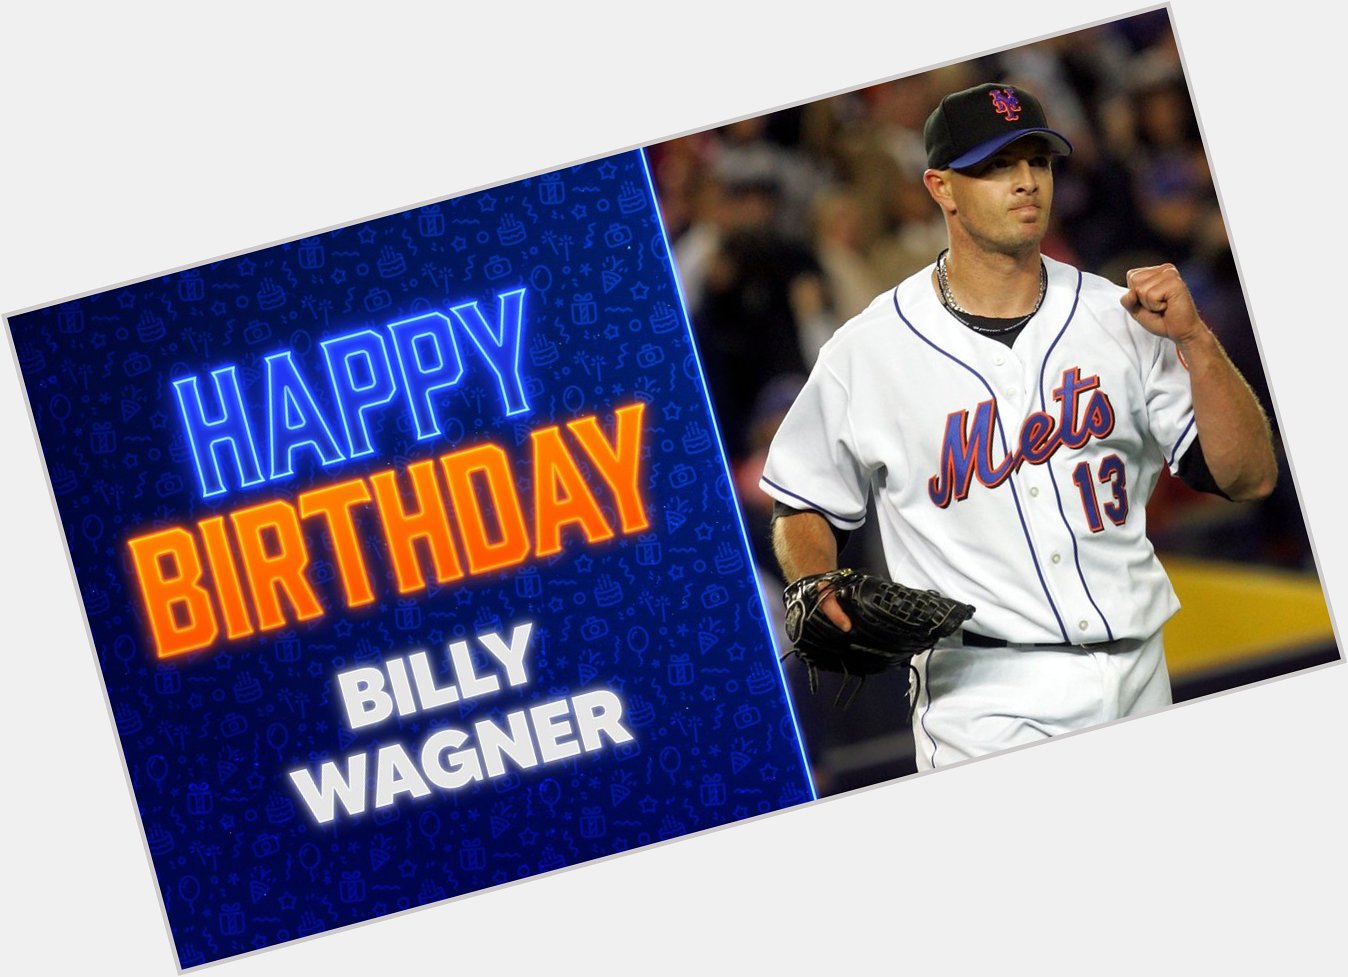 Happy birthday, Billy Wagner!  